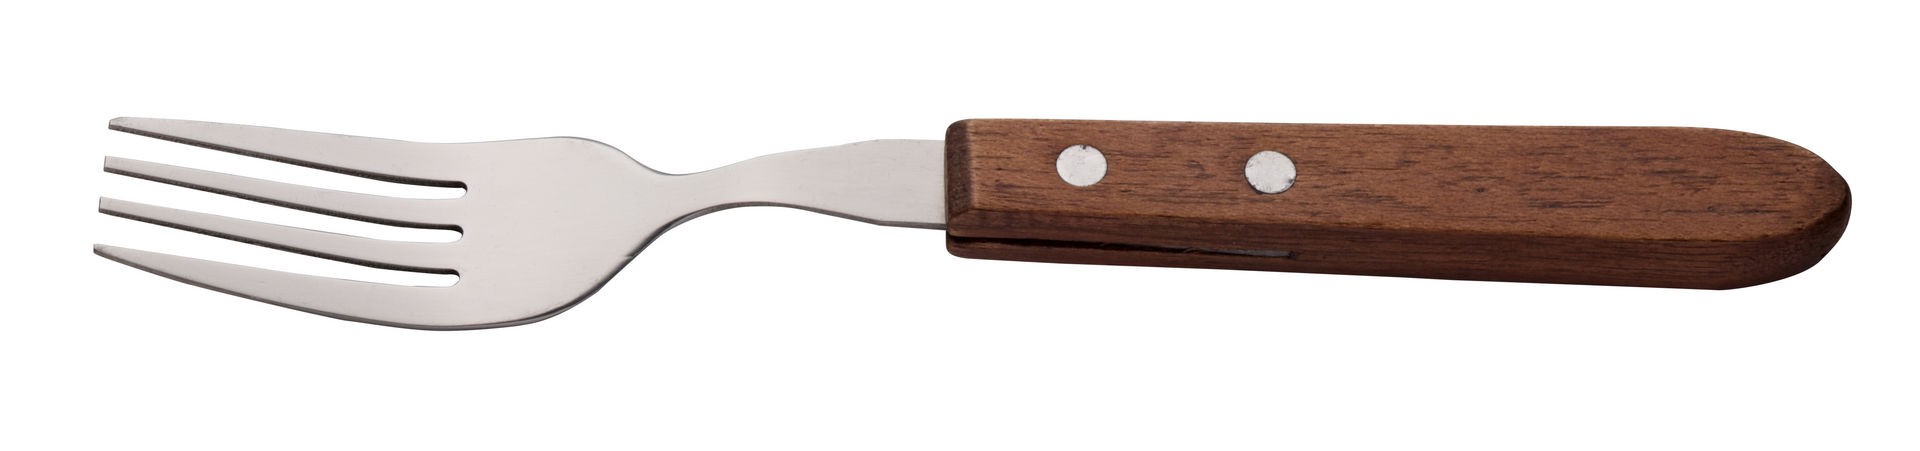 Wooden Handle Steak Fork - F10603-000000-B01012 (Pack of 12)